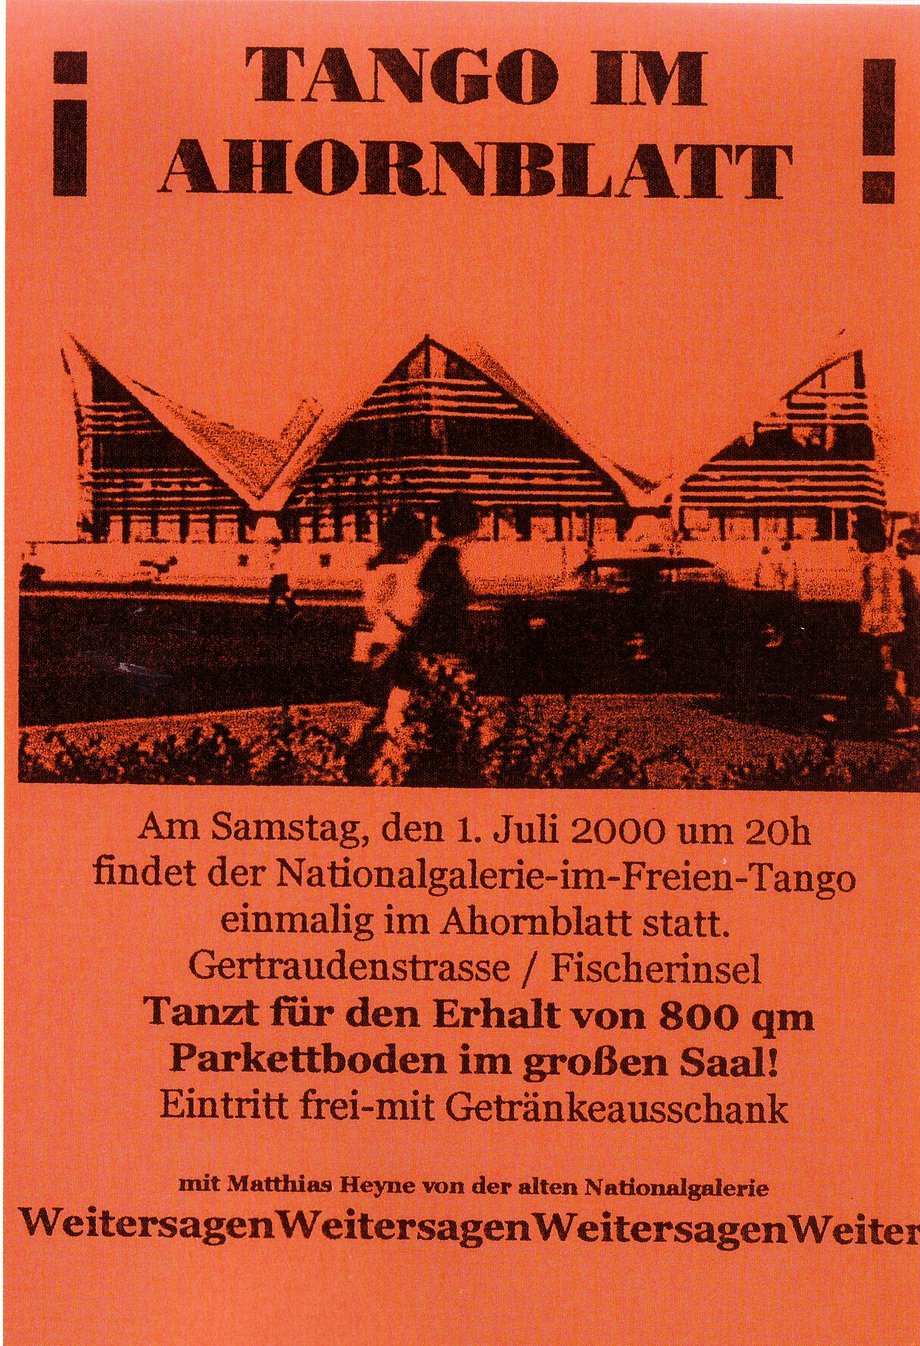 Quelle: WAGNER-JUNKER 2003, Anne Schäfer-Junker